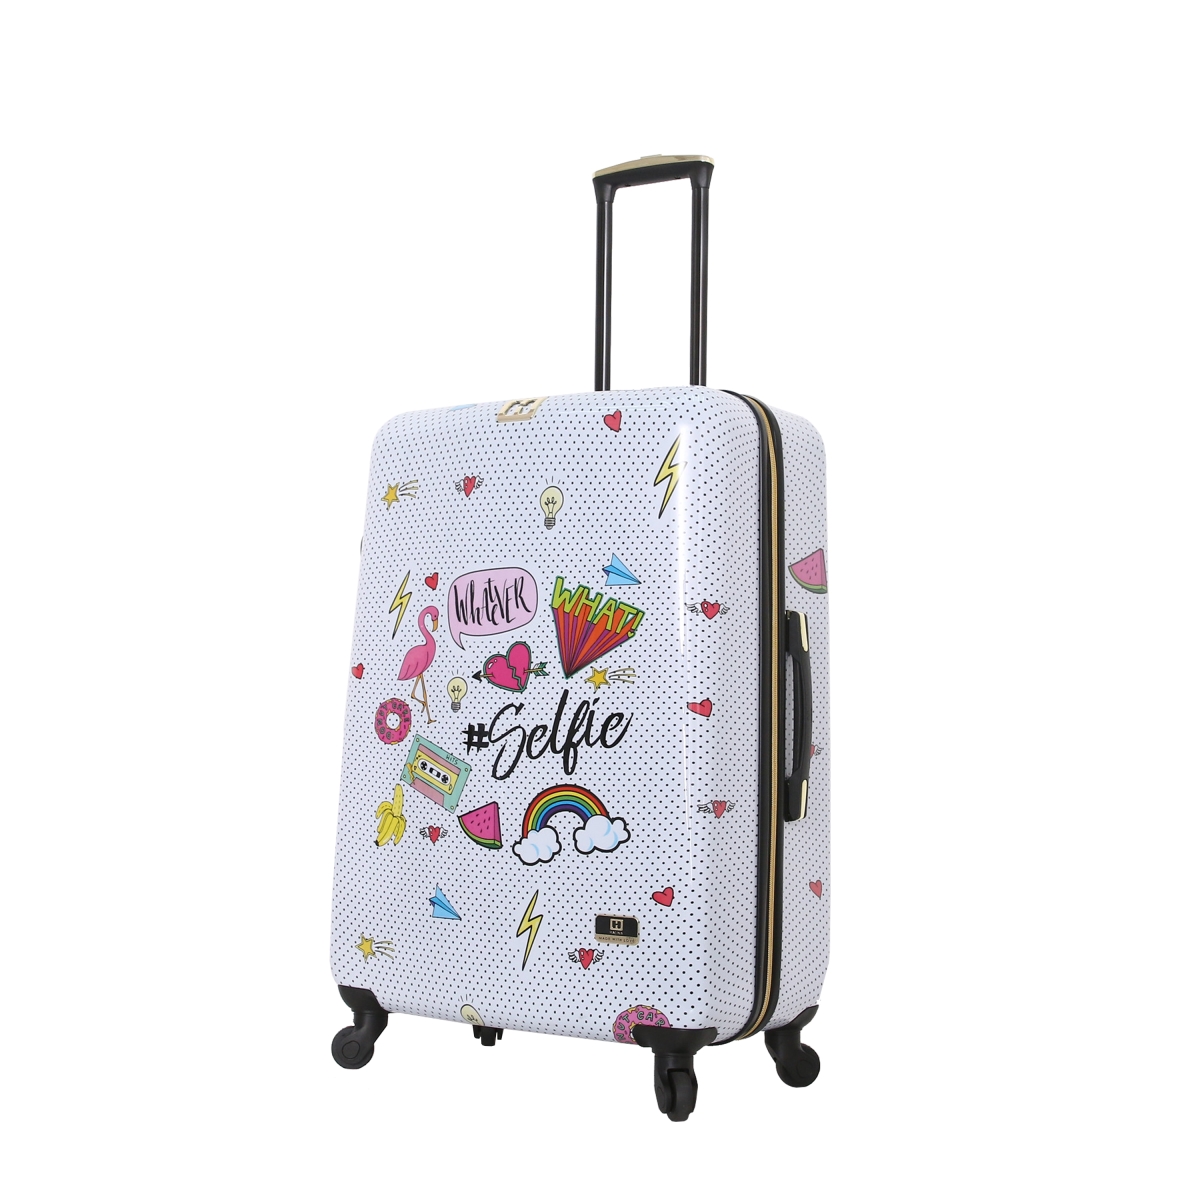 H1010-28-nwenn 28 In. Nikki Chu Whatever Cute Luggage, Multicolor